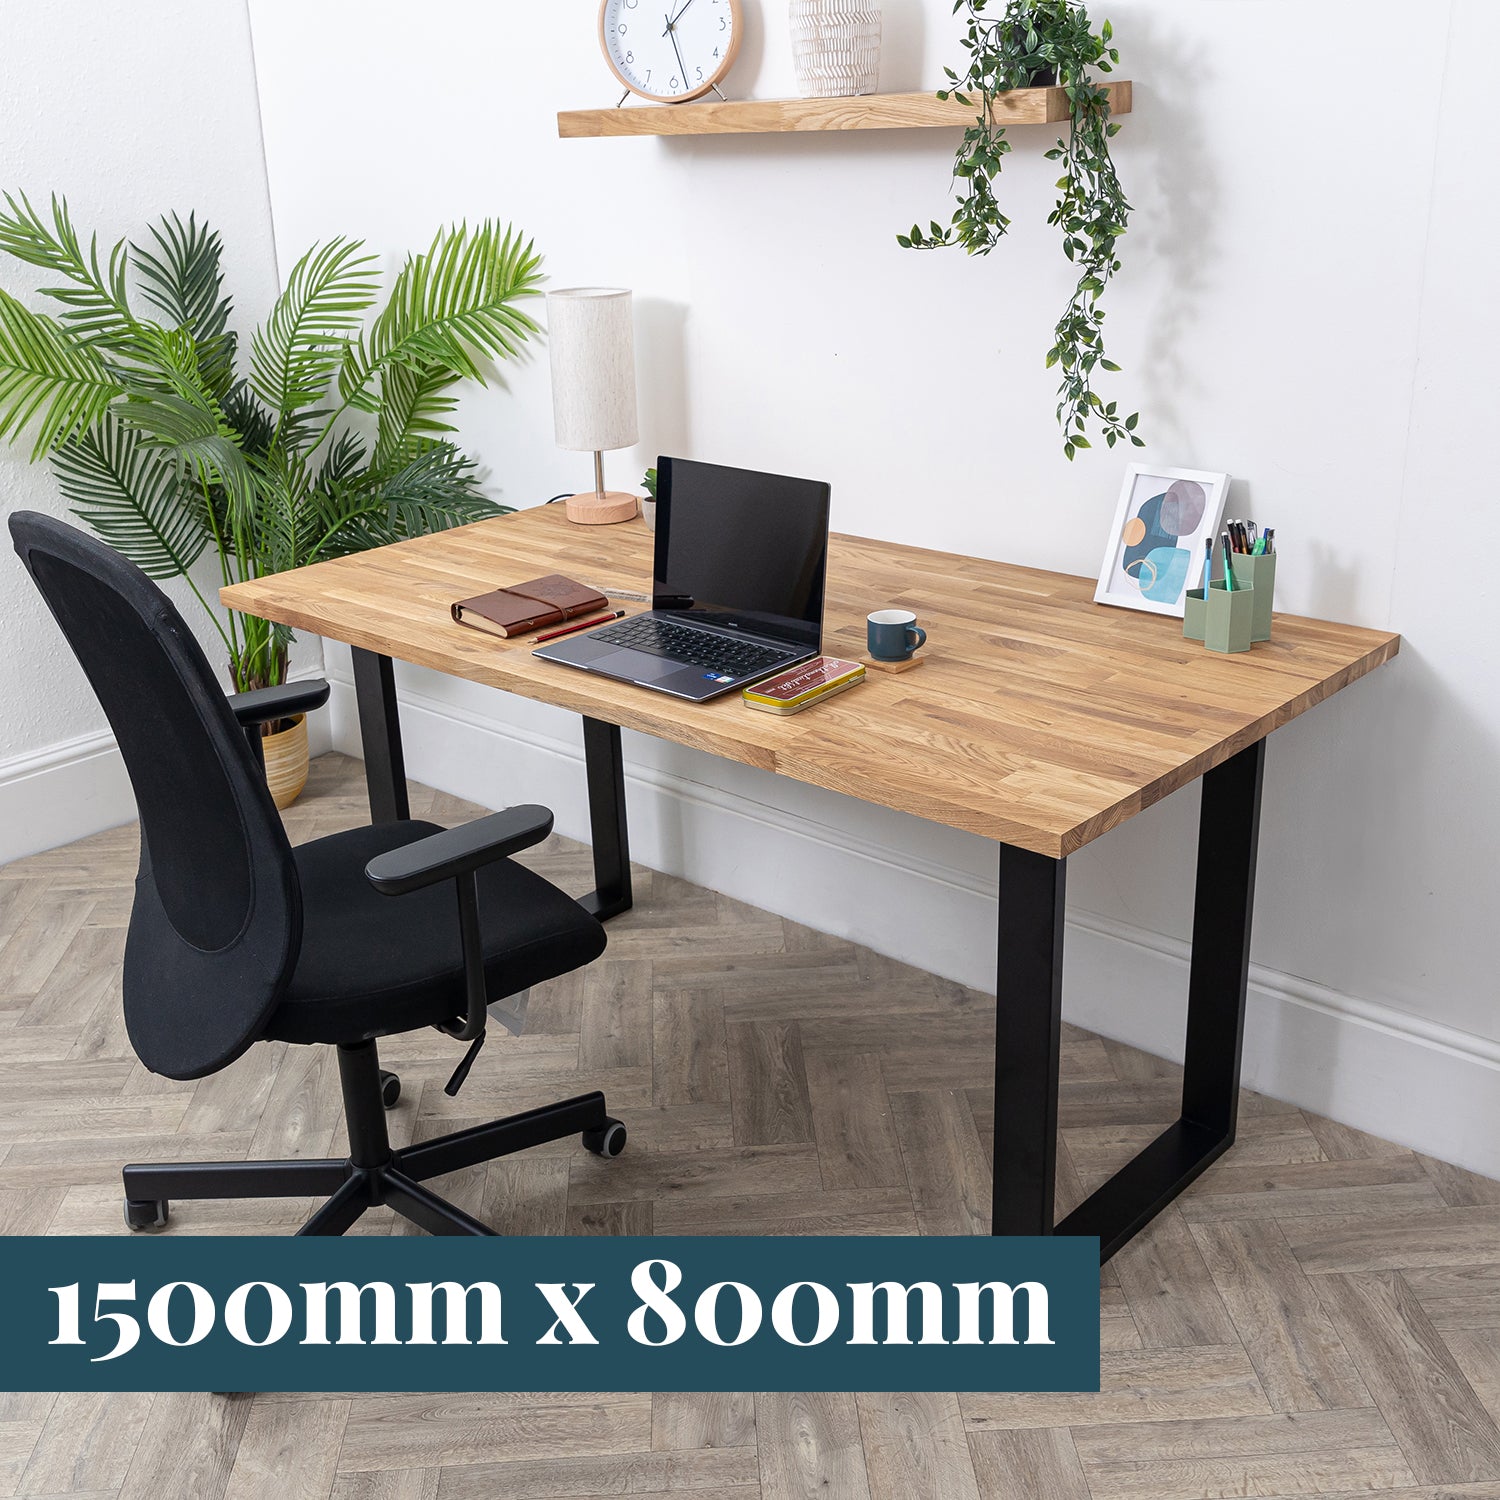 Oak Wooden Desk - 27mm thick desktop #length_1500mm depth_800mm